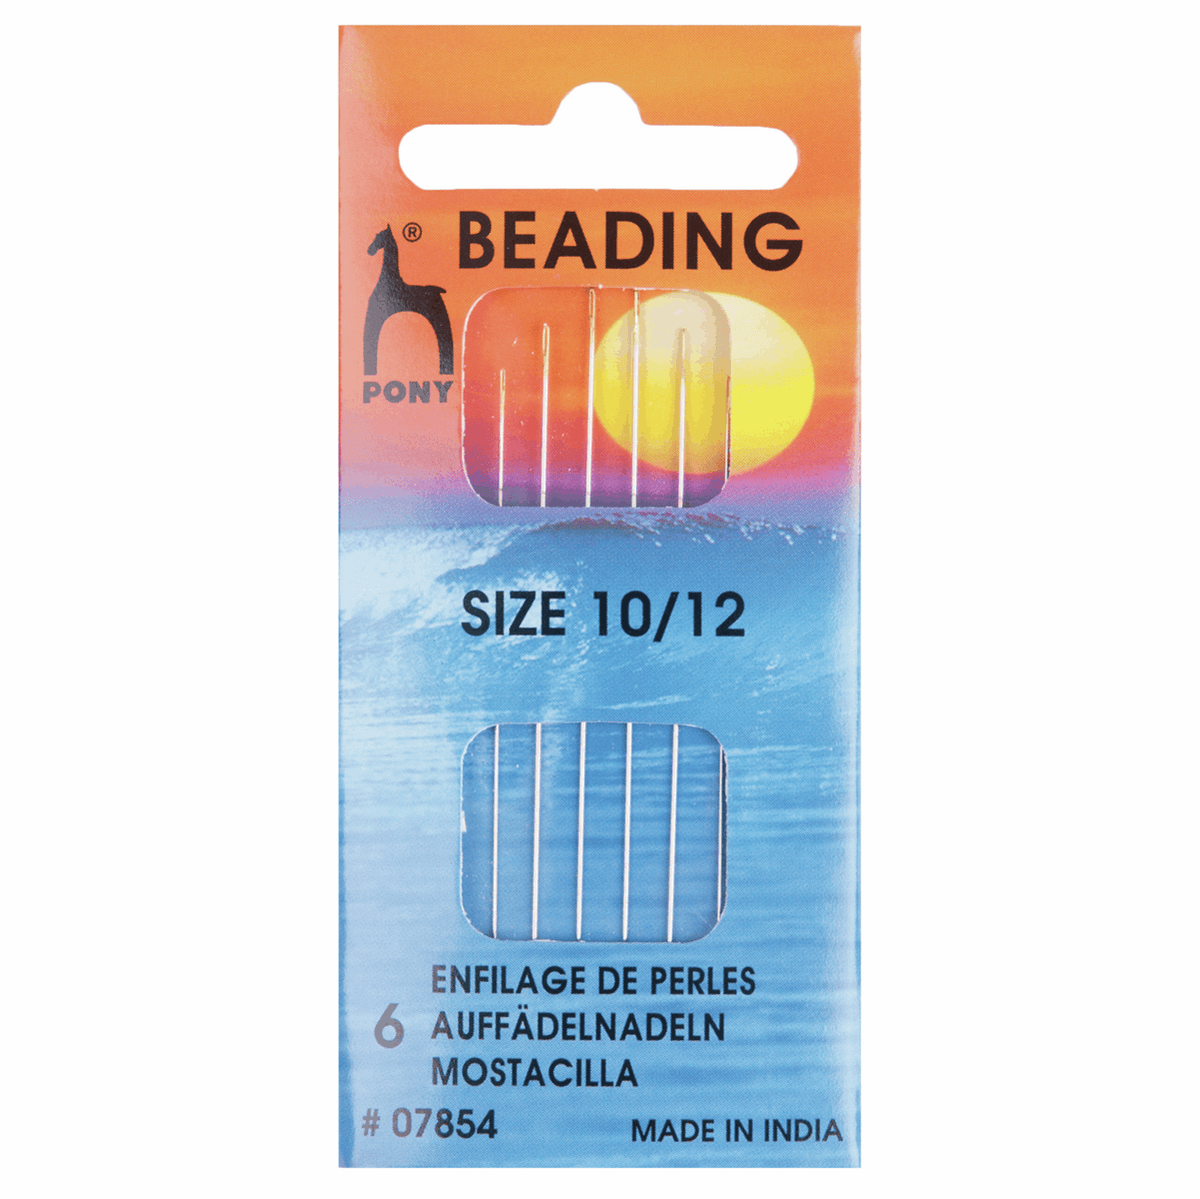 Hand Sewing Needles: Beading - Gold Eye: Size 10/12